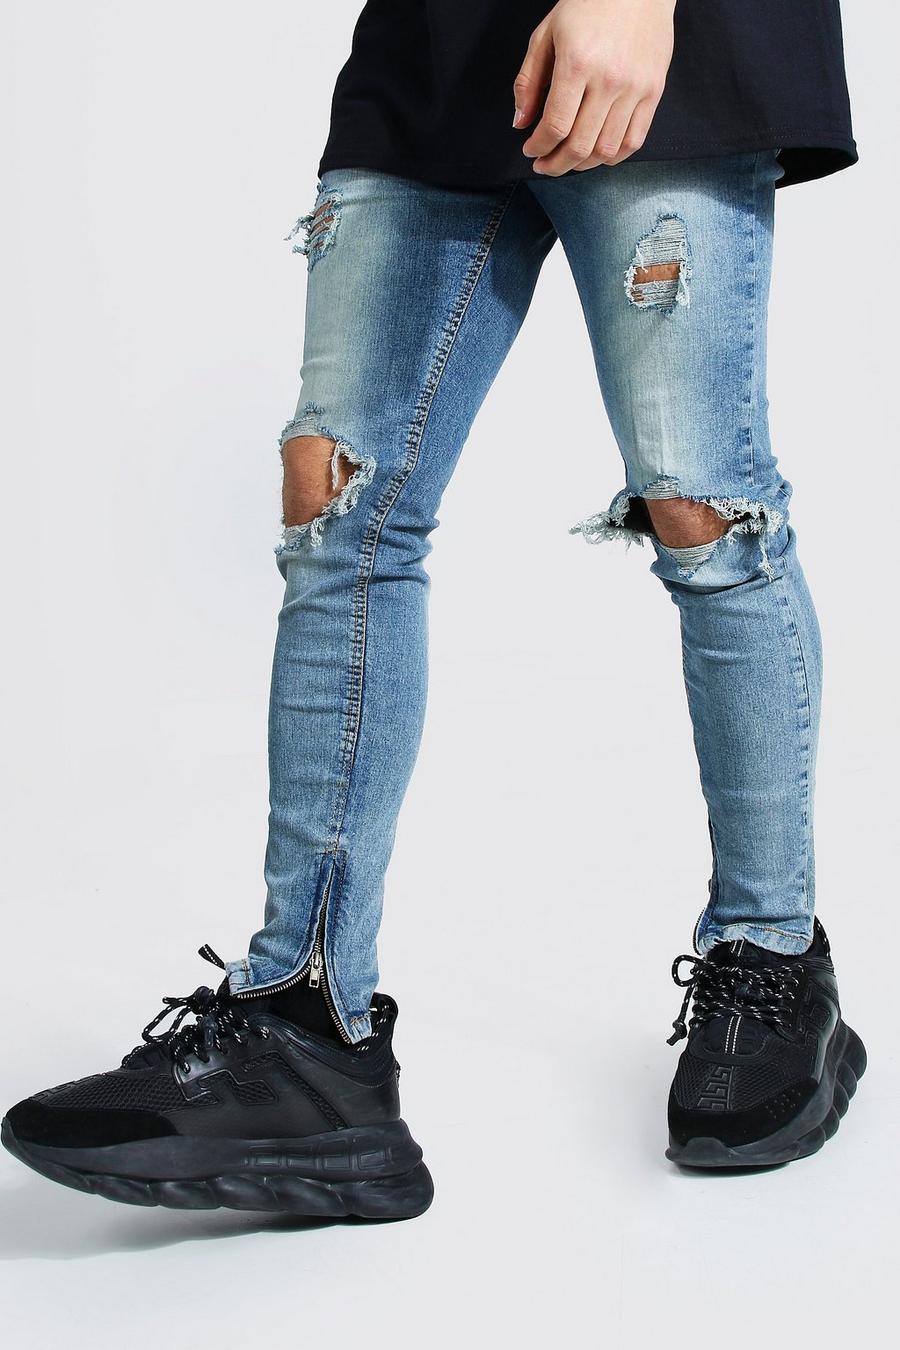 ripped-jeans-mens-style-ubicaciondepersonas-cdmx-gob-mx